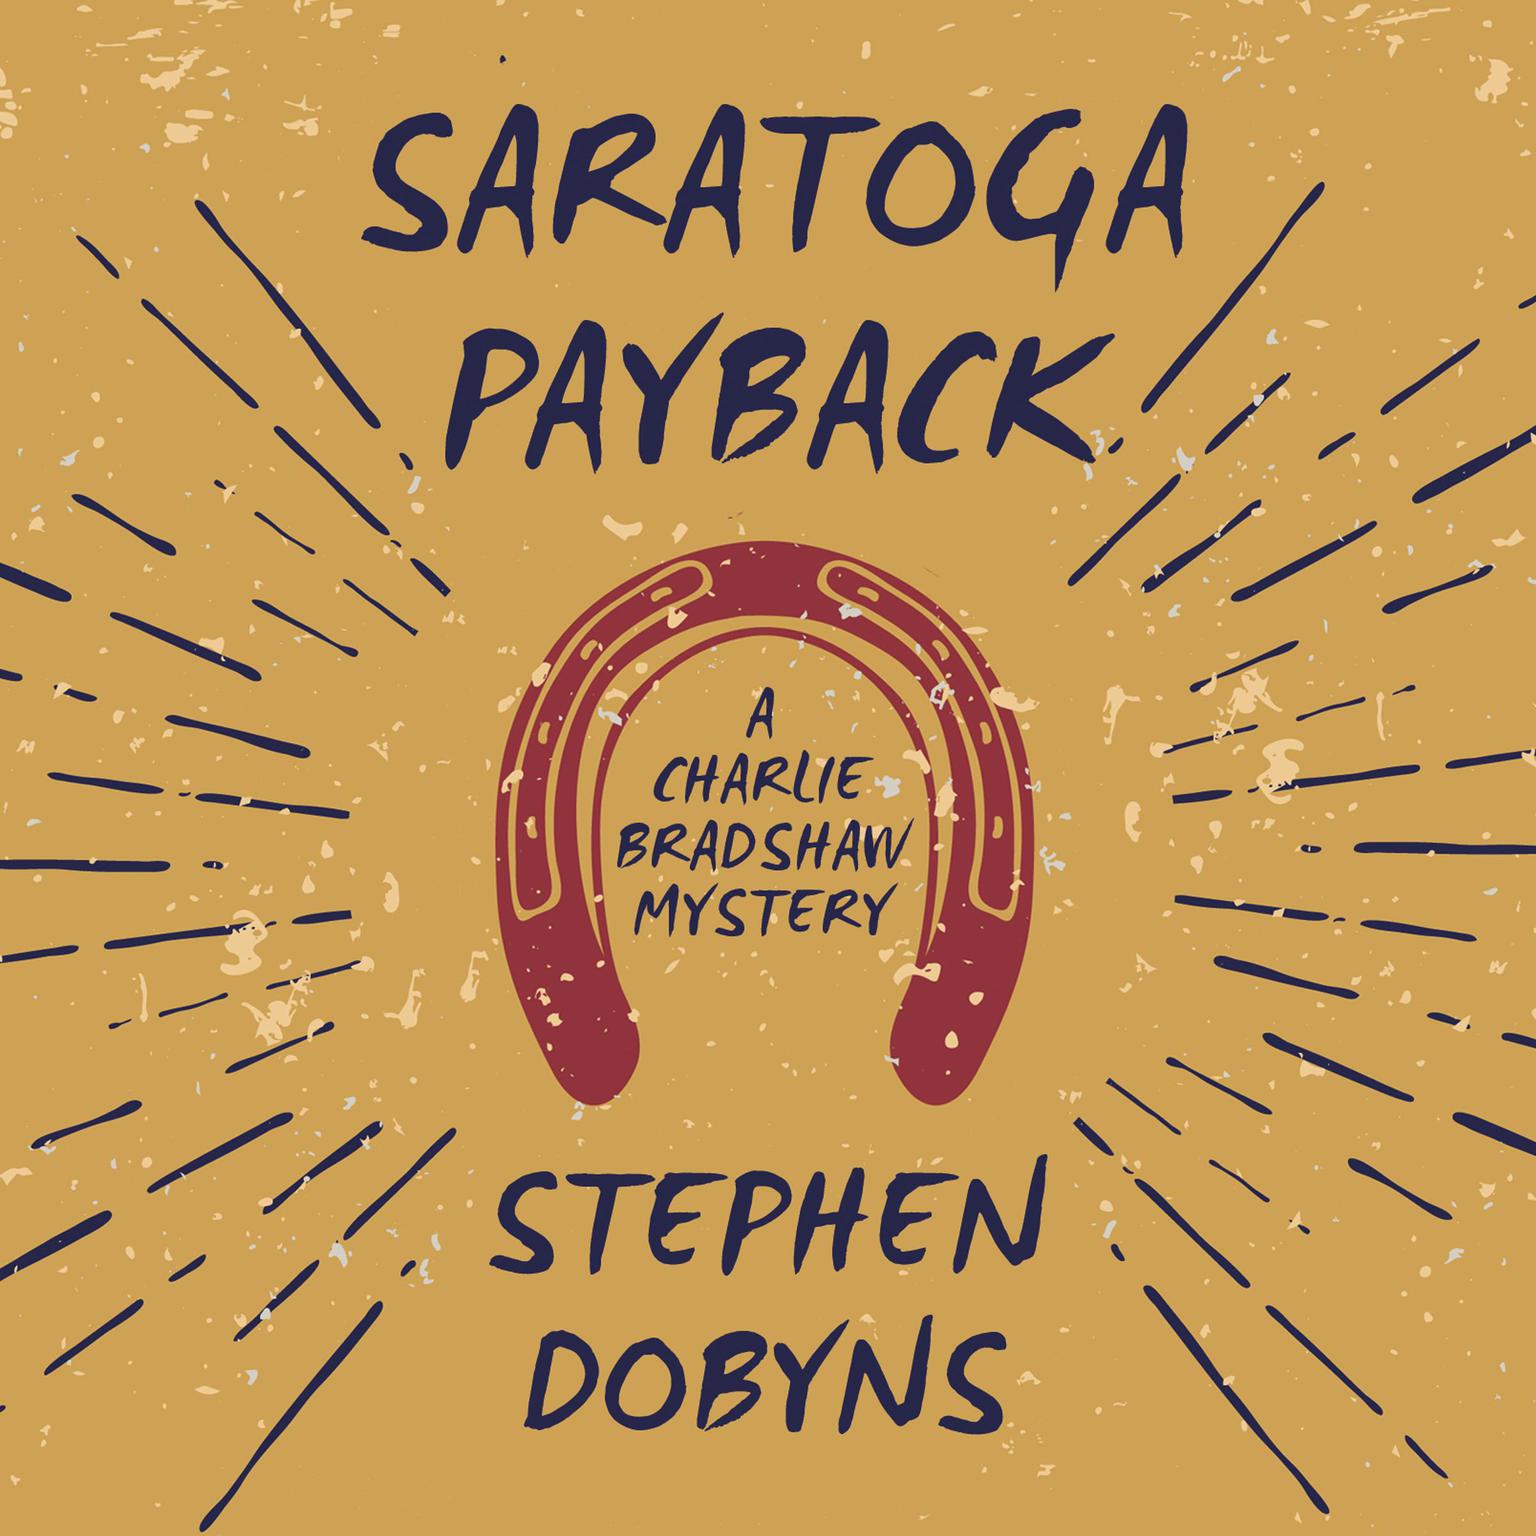 Saratoga Payback Audiobook, by Stephen Dobyns